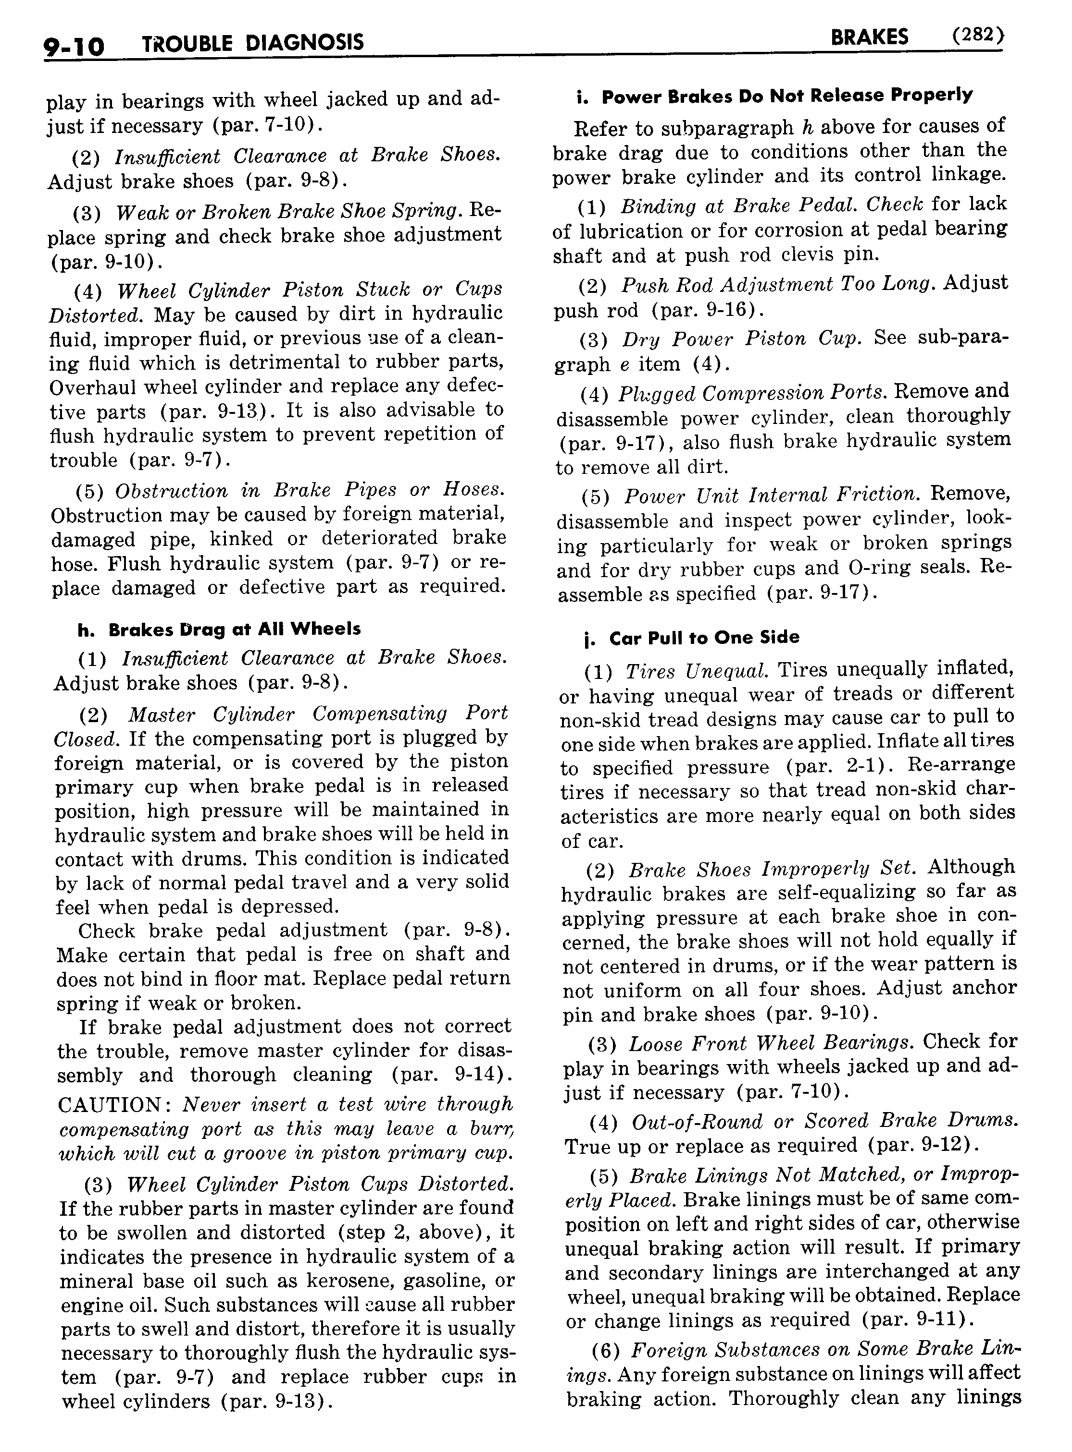 n_10 1955 Buick Shop Manual - Brakes-010-010.jpg